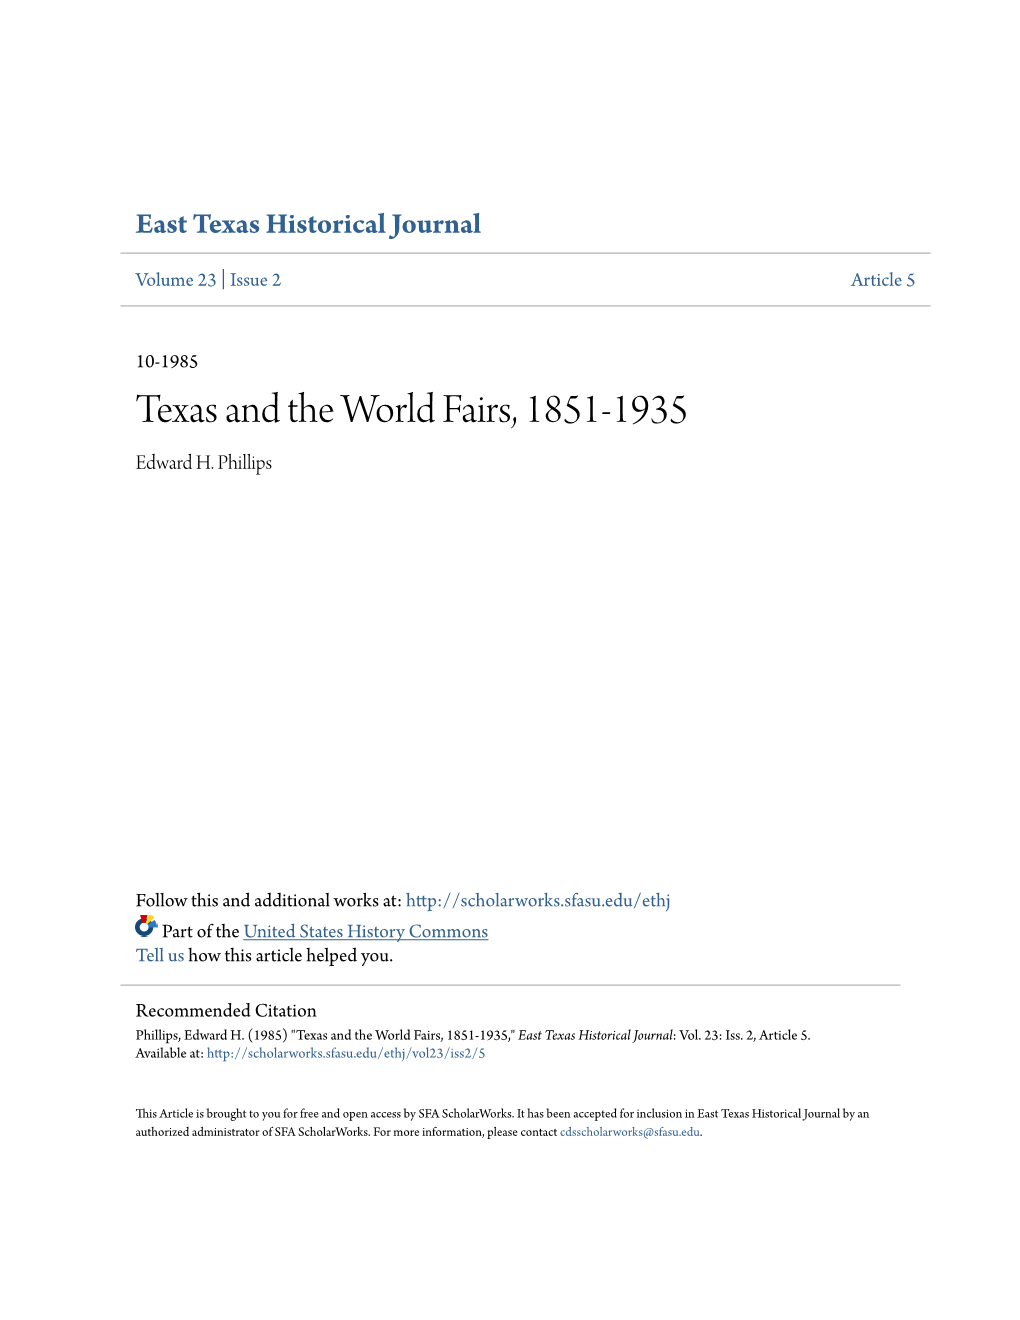 Texas and the World Fairs, 1851-1935 Edward H